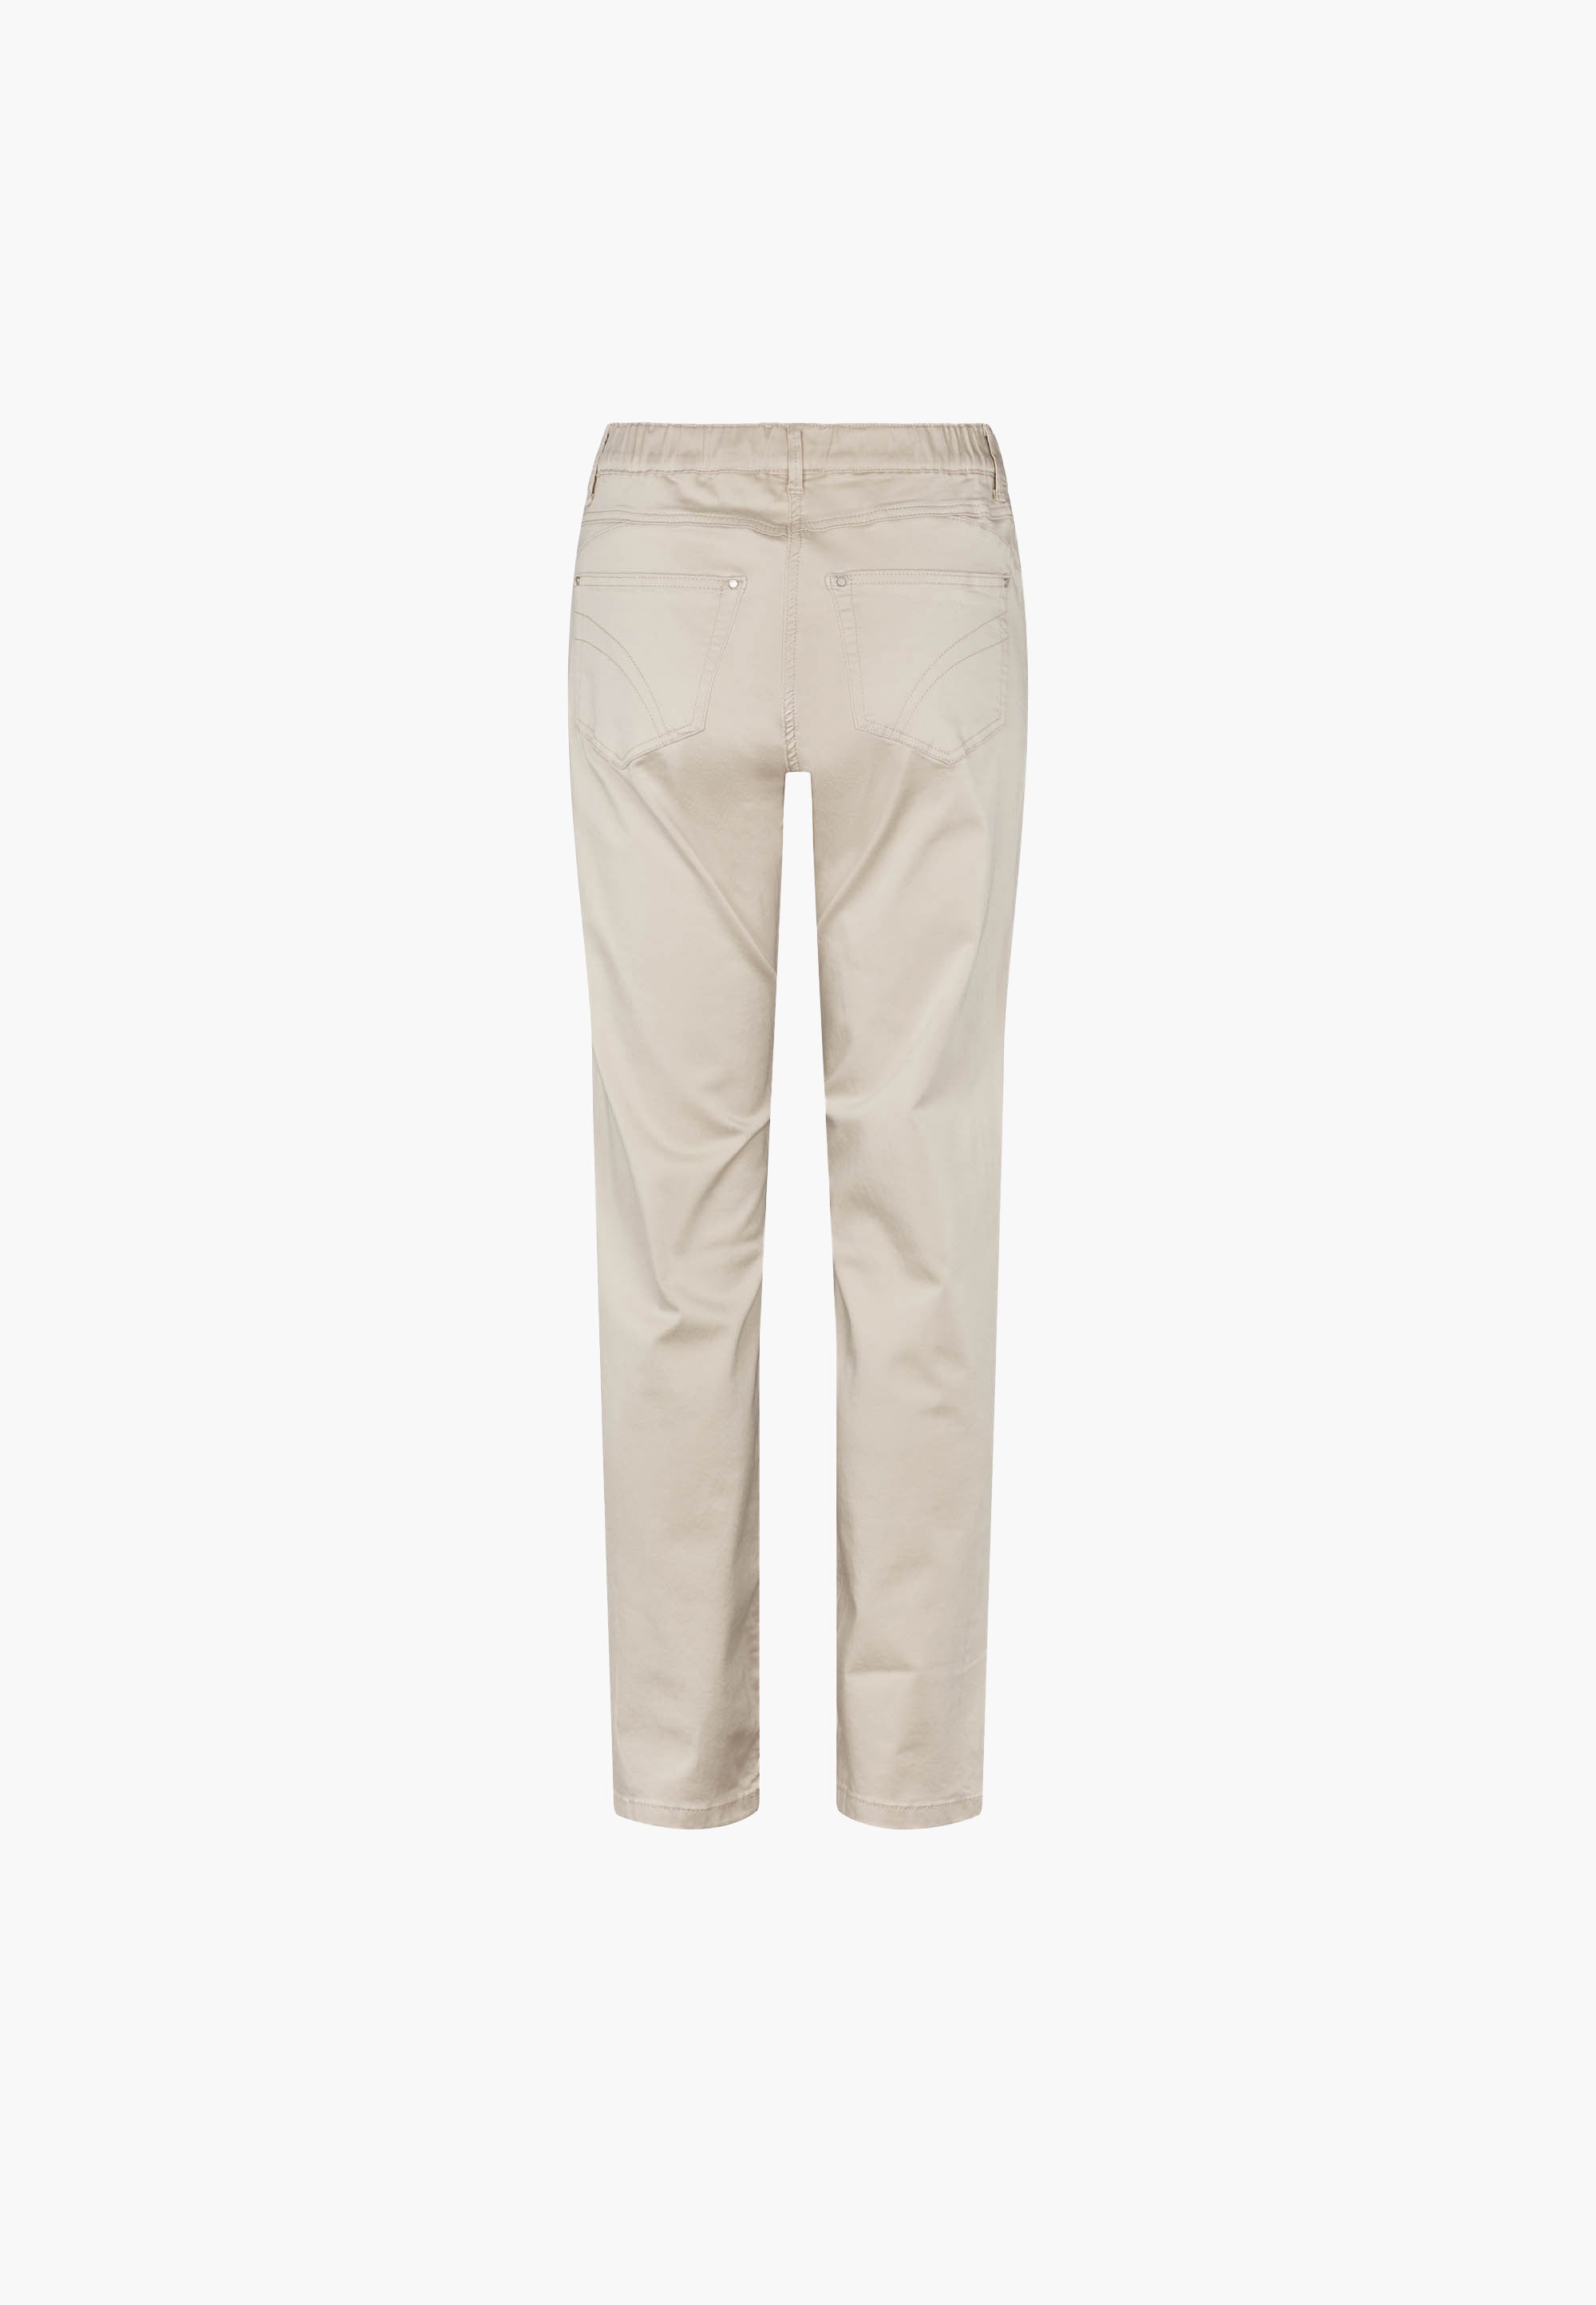 LAURIE  Hannah Regular - Medium Length Trousers REGULAR 25102 Grey Sand